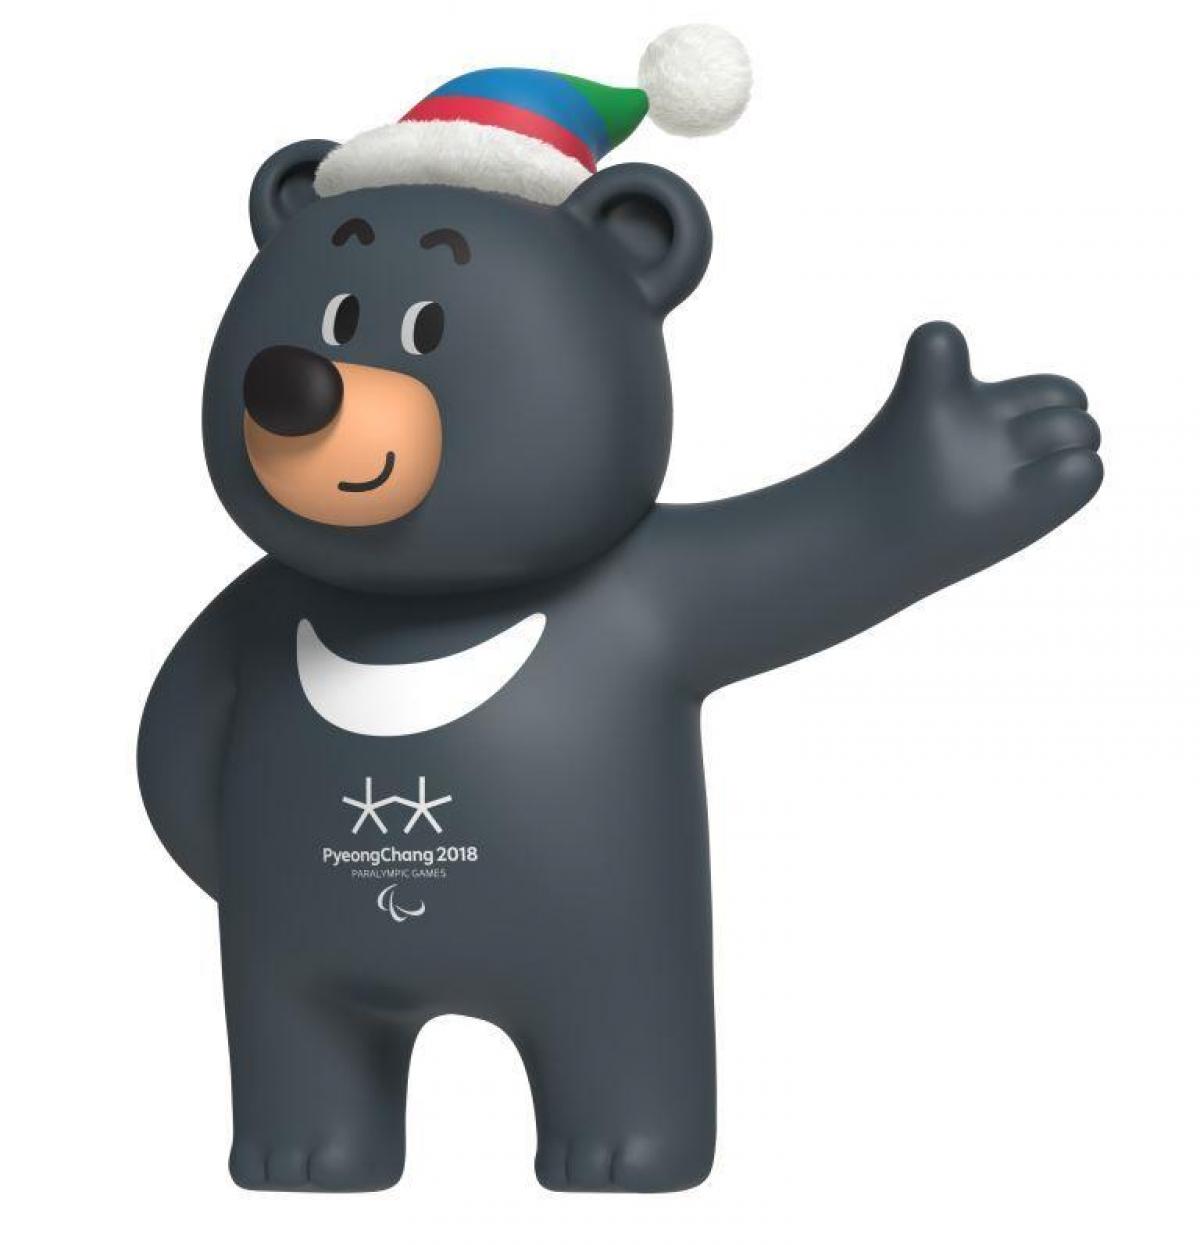 Bandabi - PyeongChang 2018 mascot